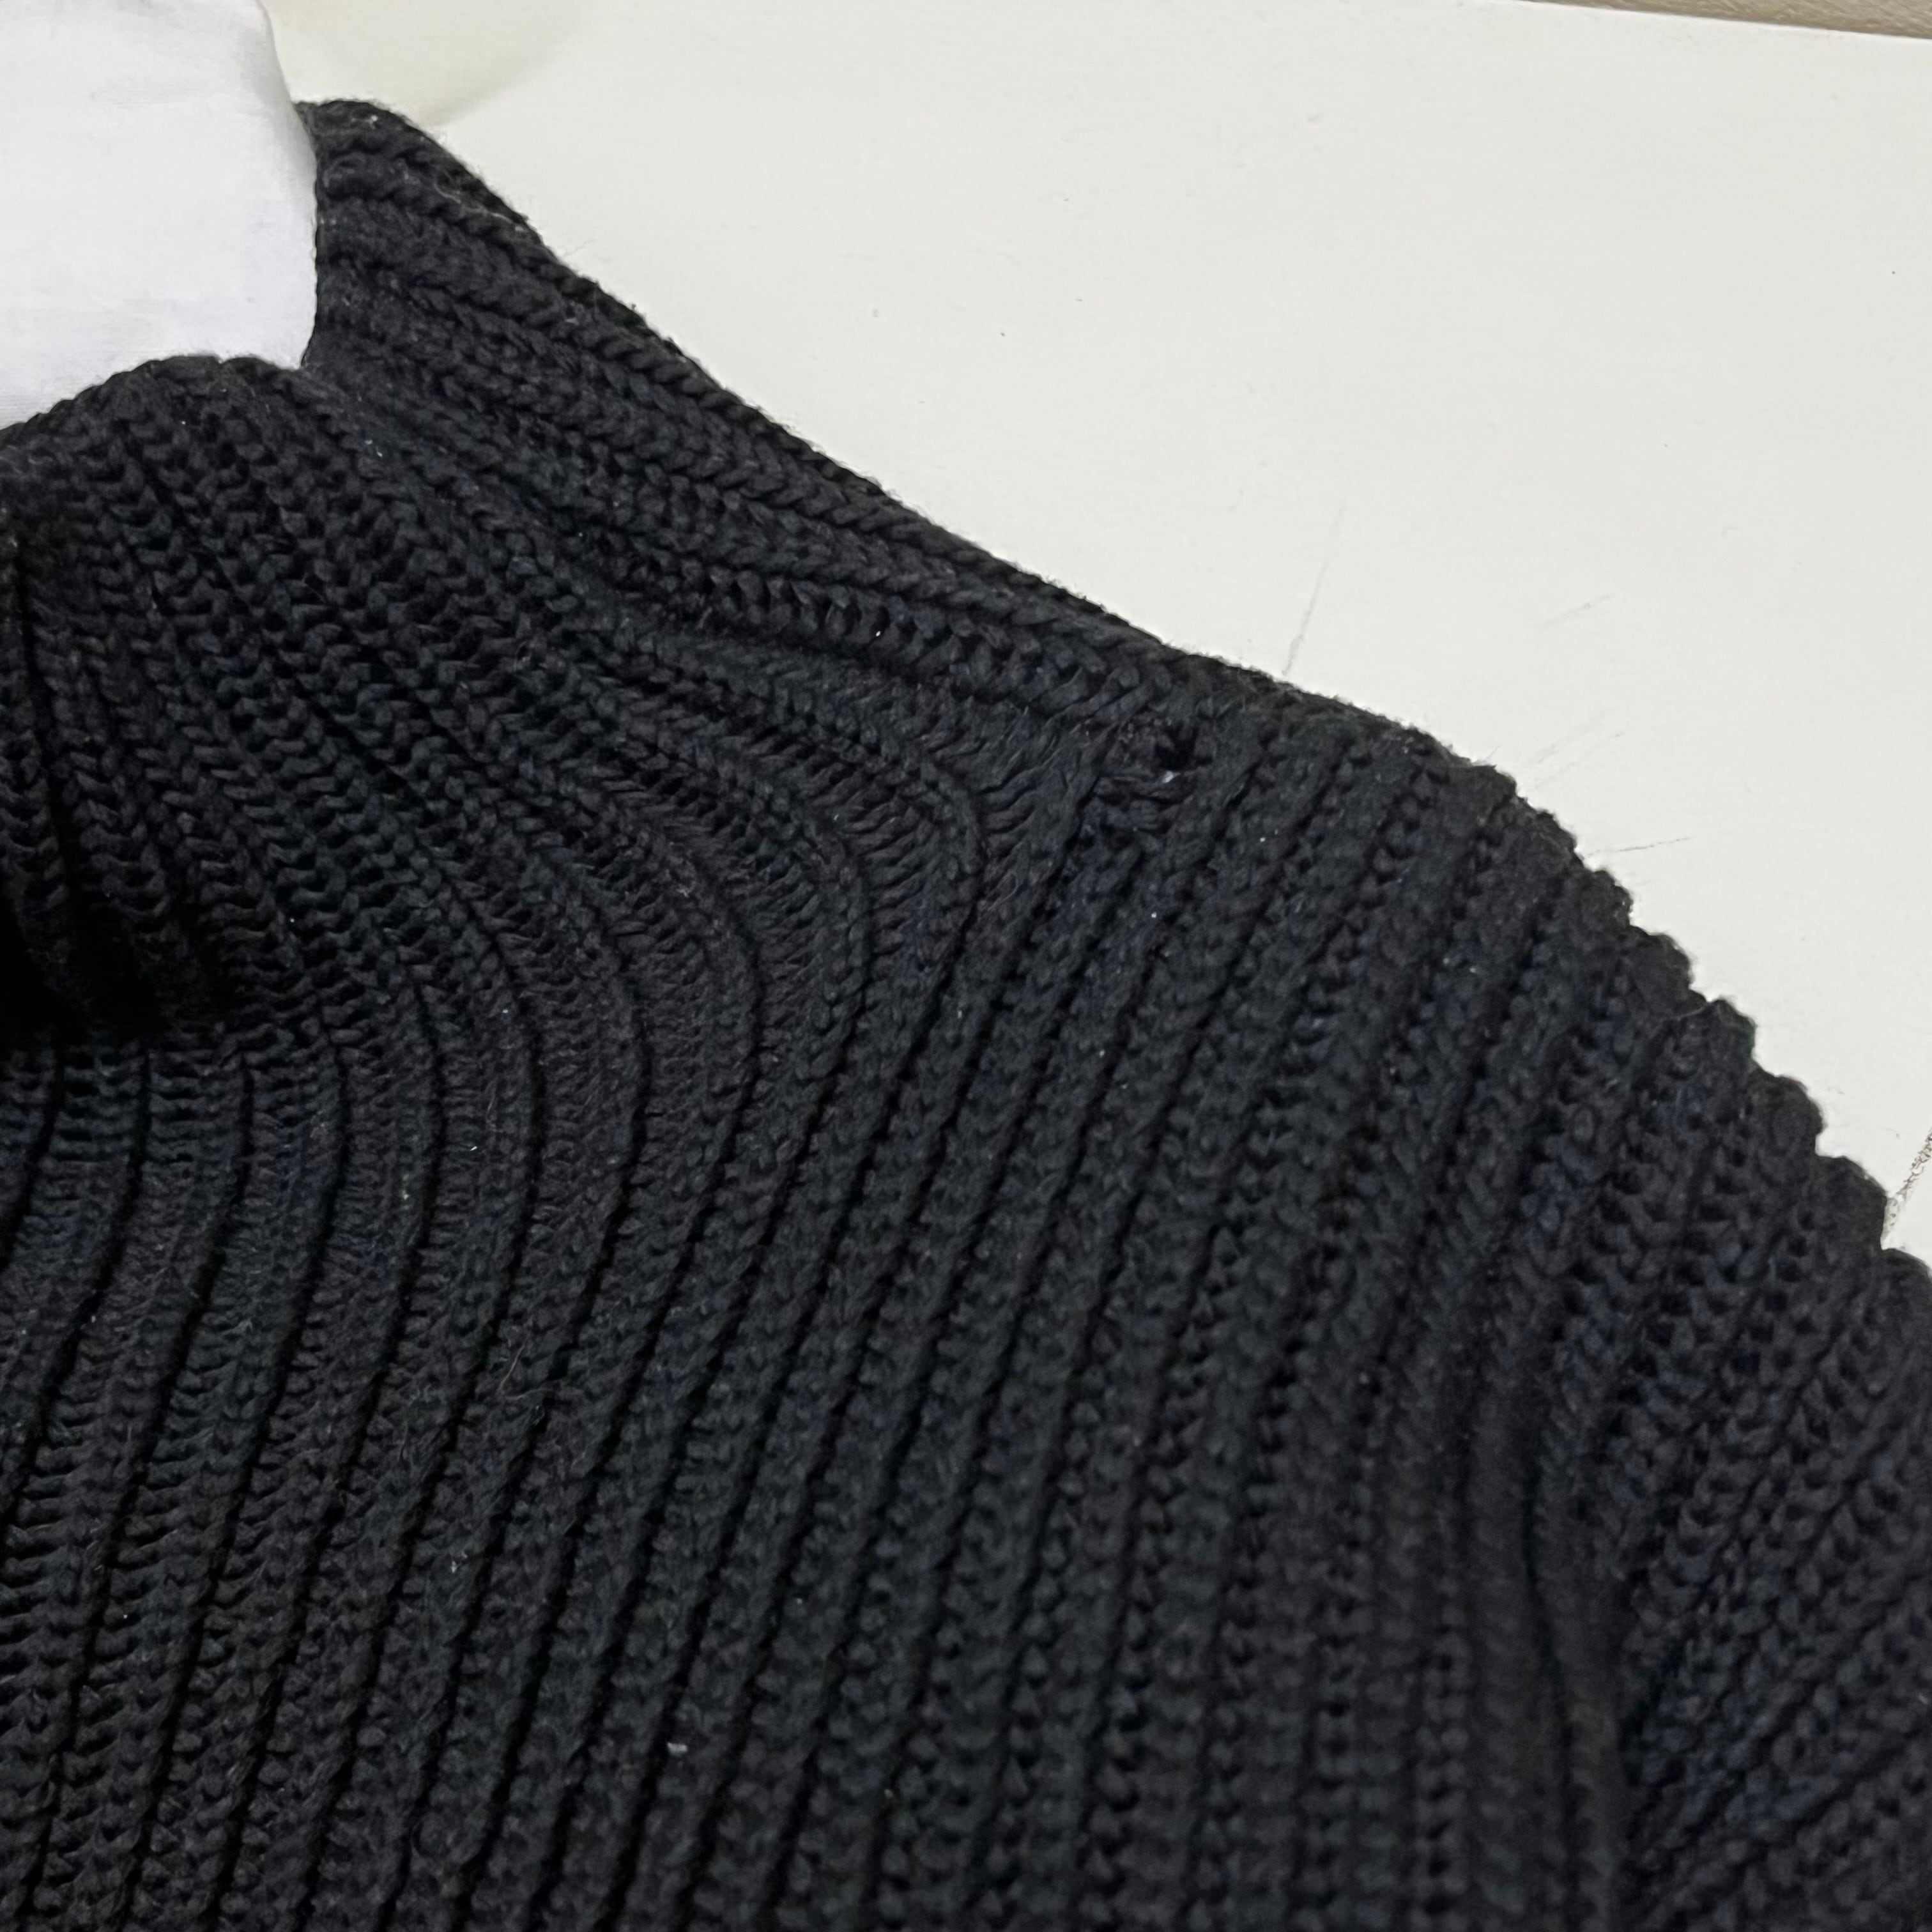 omar afridi 21aw arabis knit複数回着用後保管しておりました